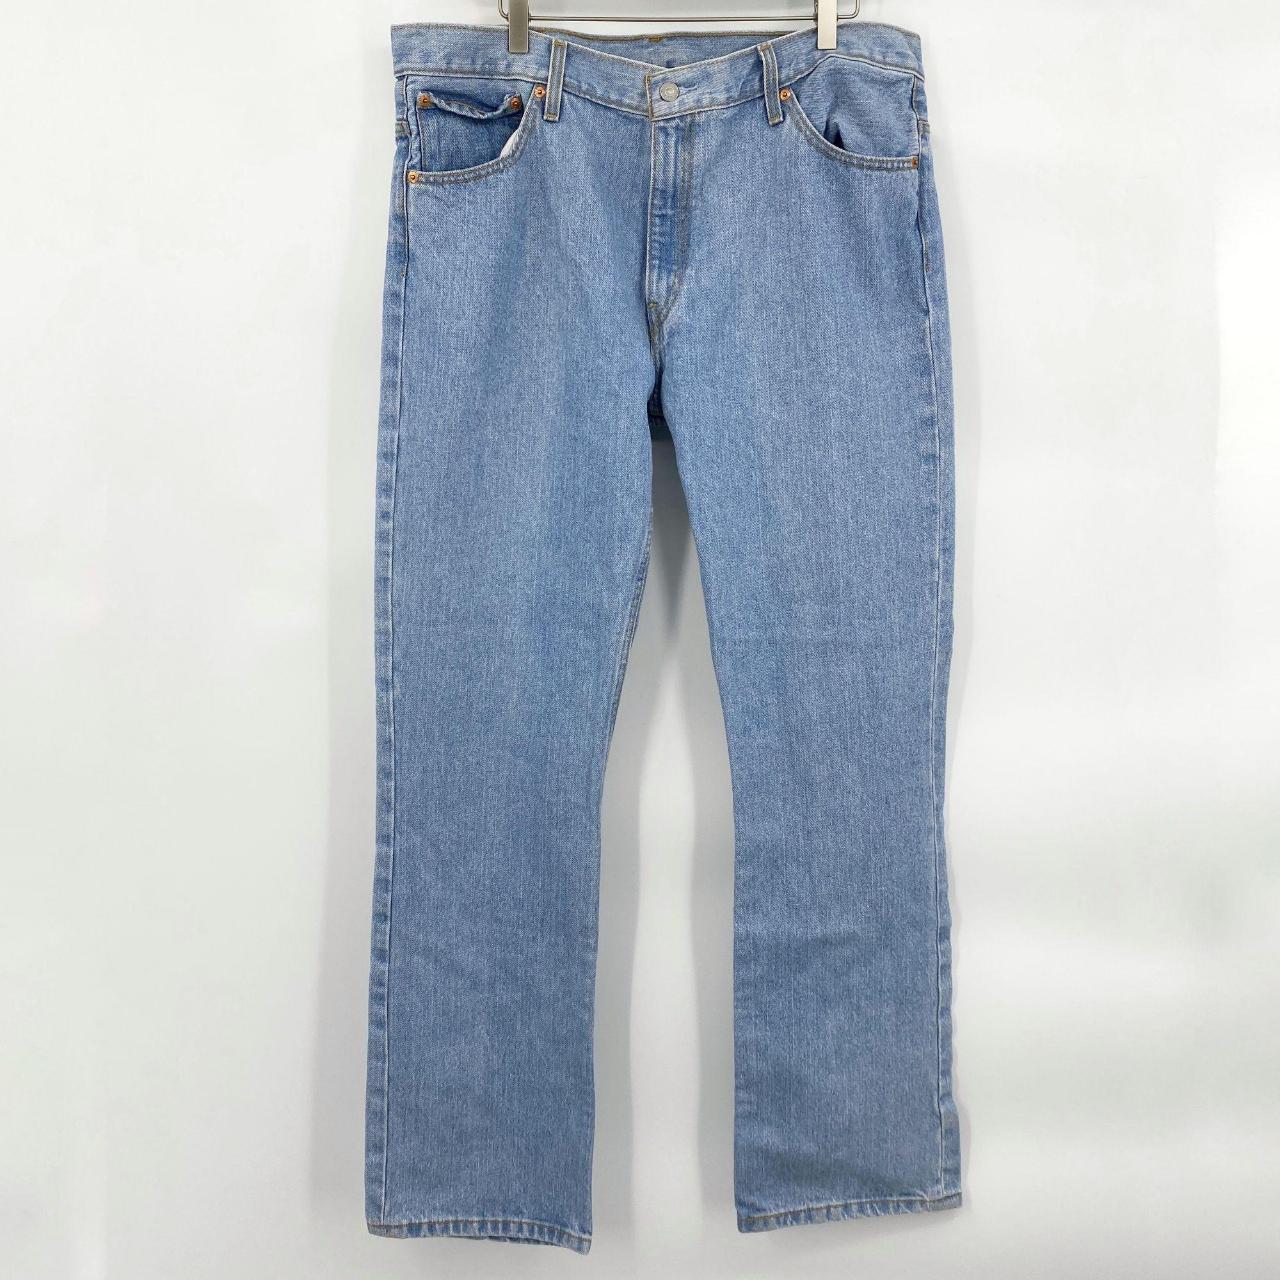 Levi's 507 Rare Mislabeled Jeans Size 38x35. Labeled... - Depop